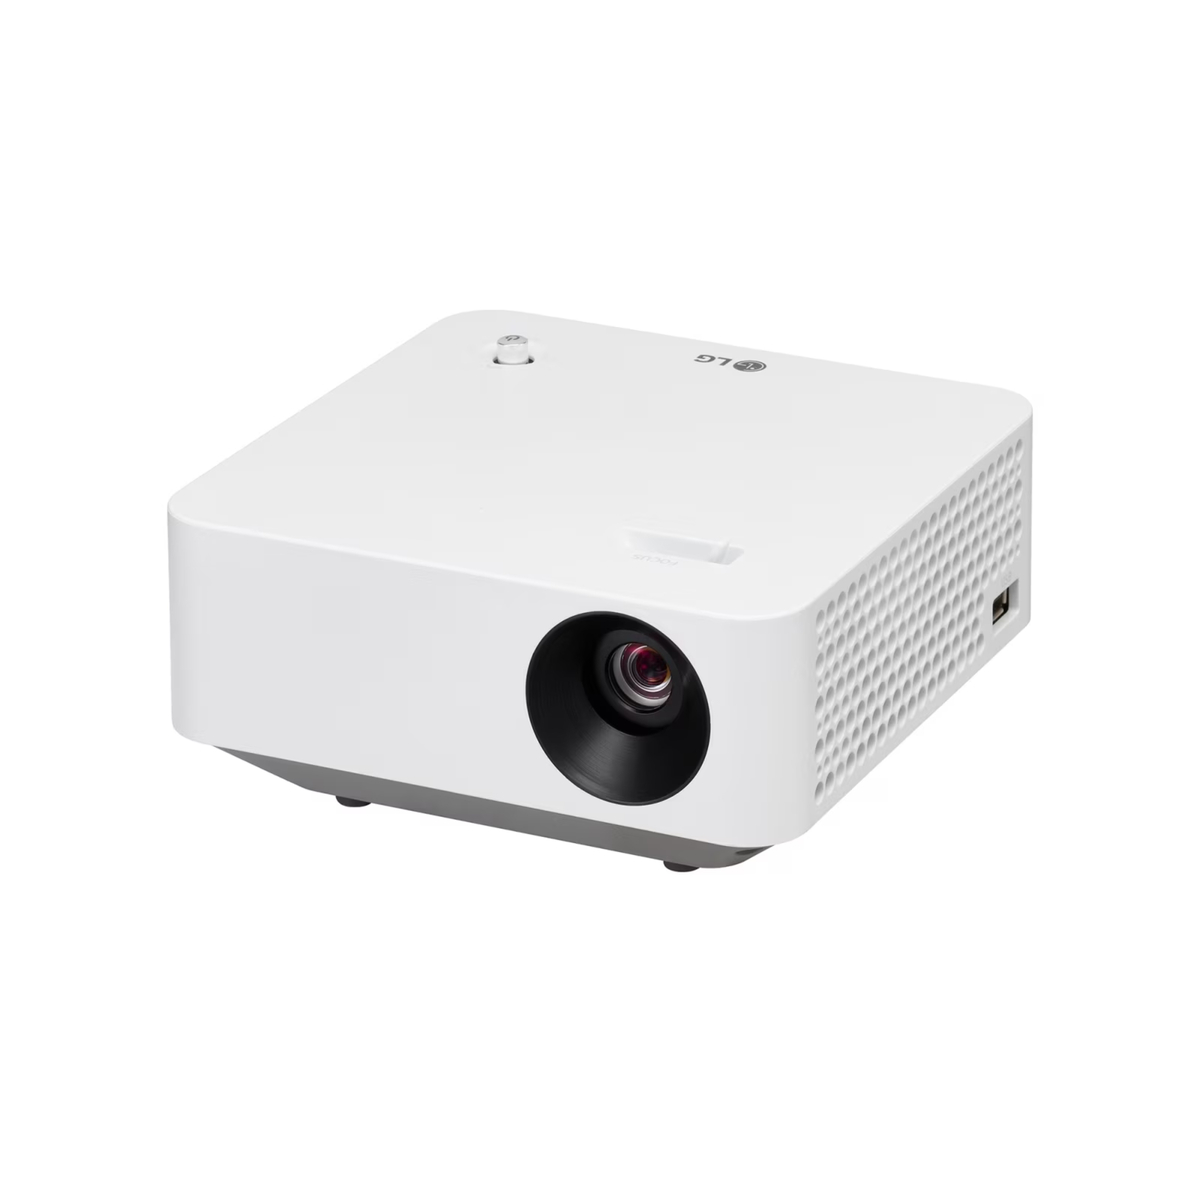 LG CineBeam LED Smart Portable Projector, White, PF510QAMA